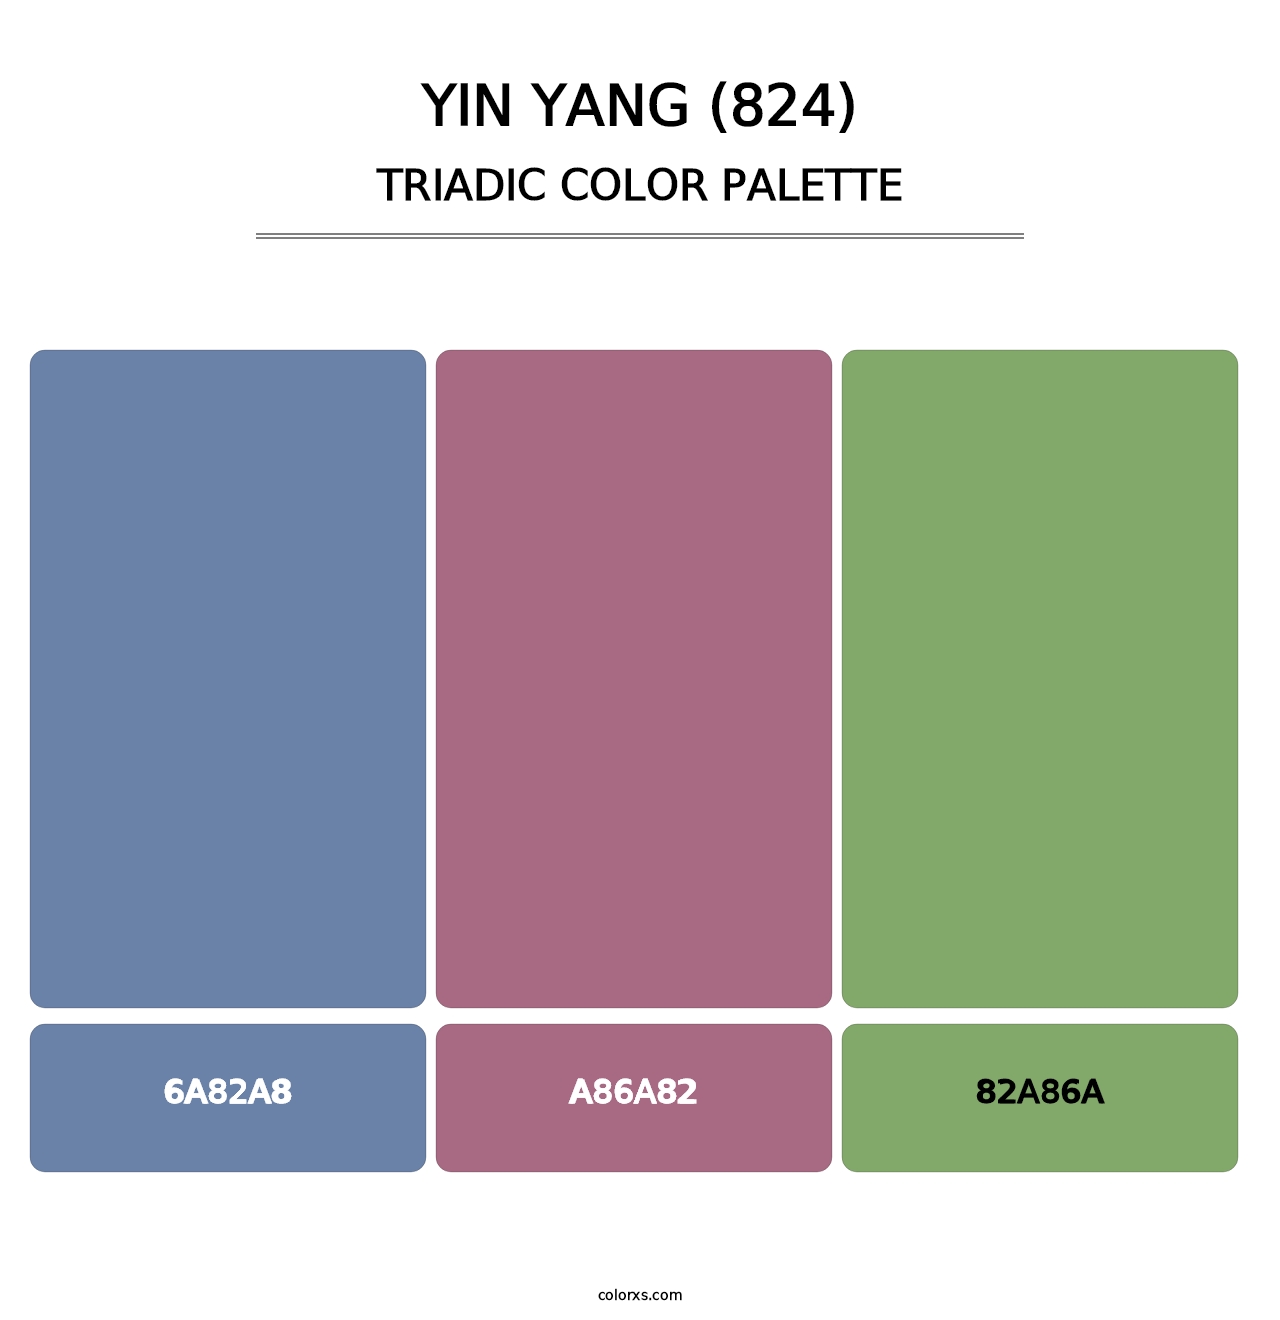 Yin Yang (824) - Triadic Color Palette